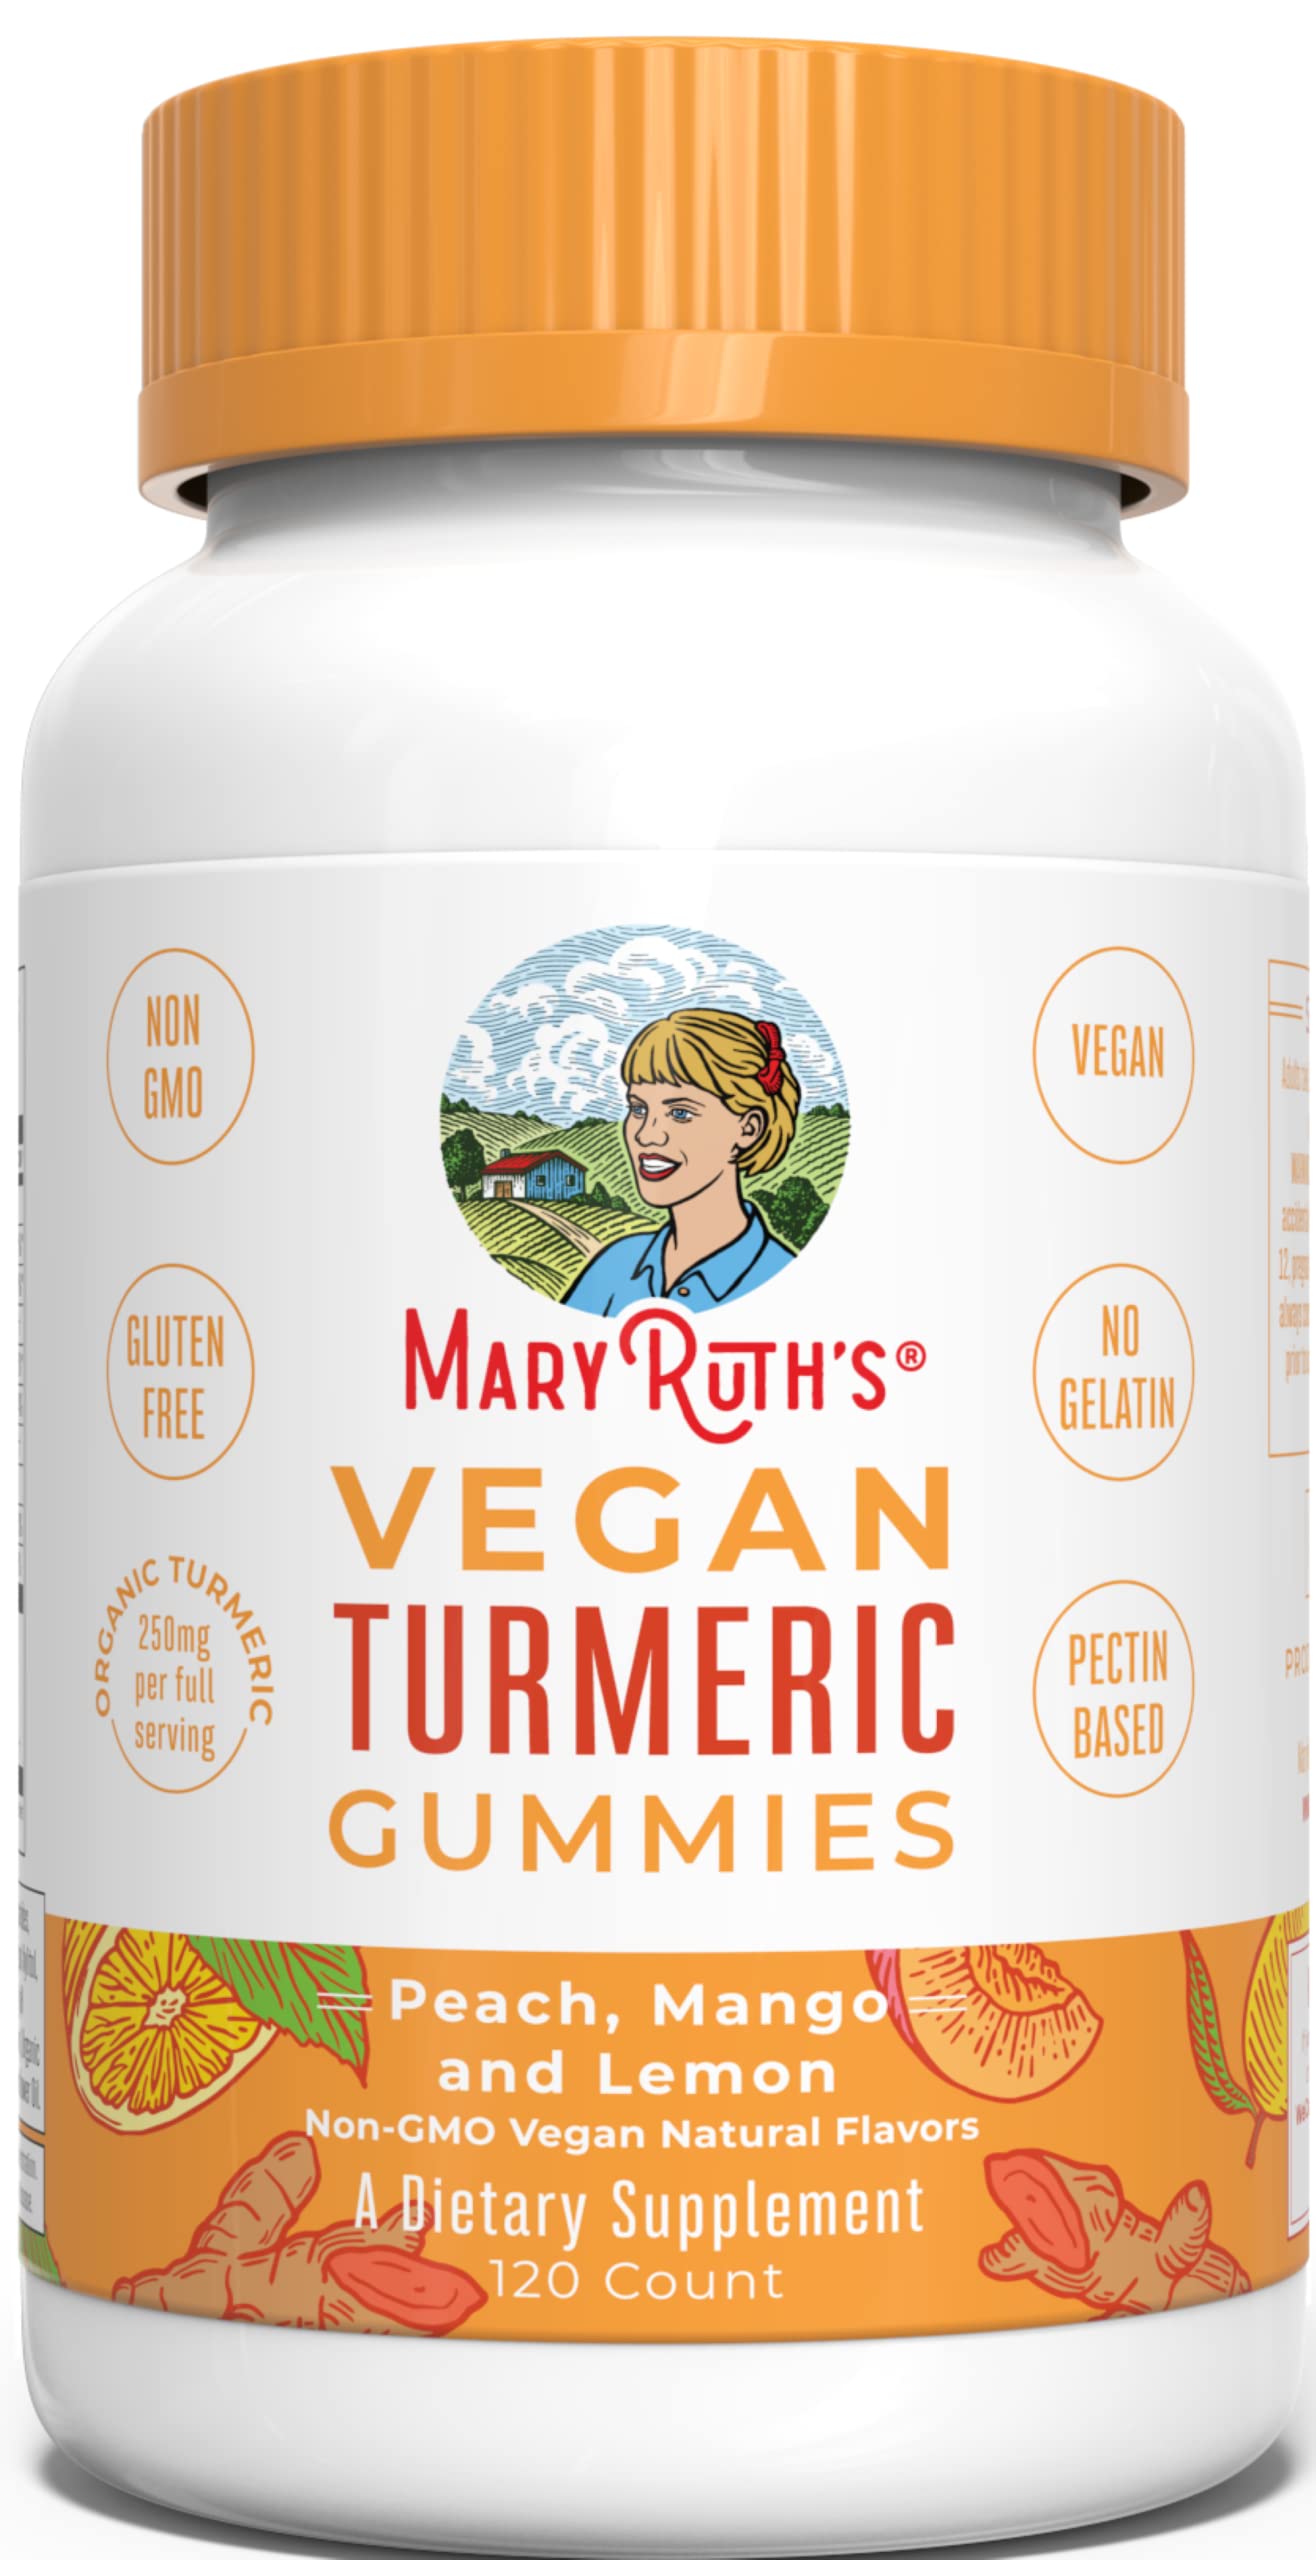 MaryRuth Organics Turmeric Gummies | Organic Turmeric Curcumin Extract | Chewable Turmeric Supplement | Vegan, Non-GMO, Gluten Free | Peach, Mango & Lemon Flavor | 250 mg per Serving | 120 Count